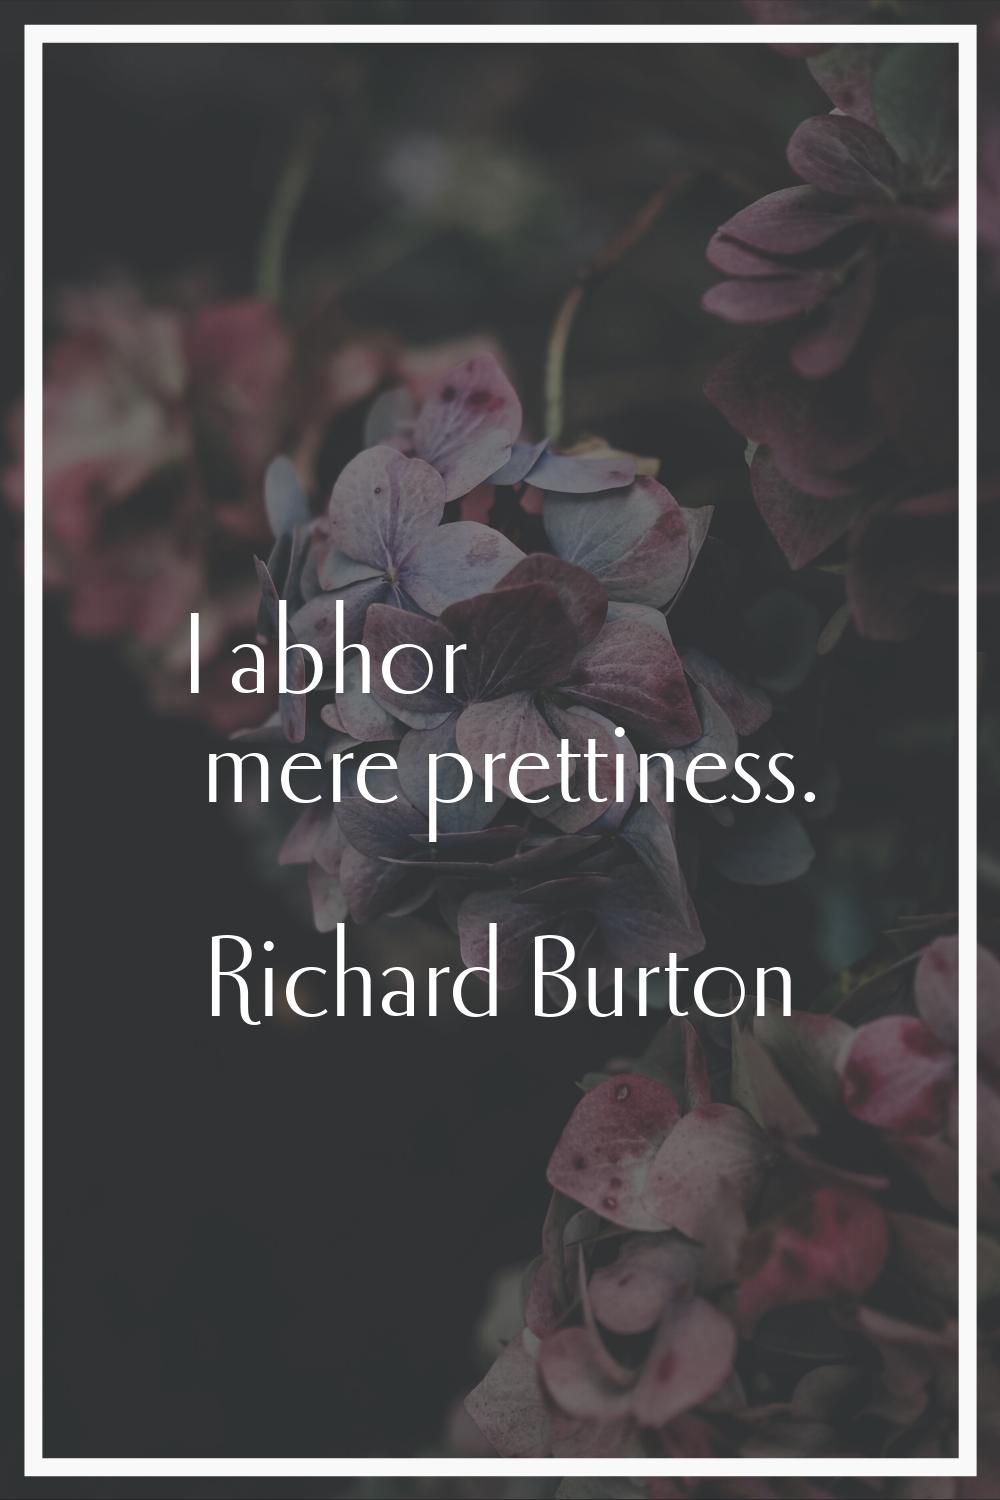 I abhor mere prettiness.